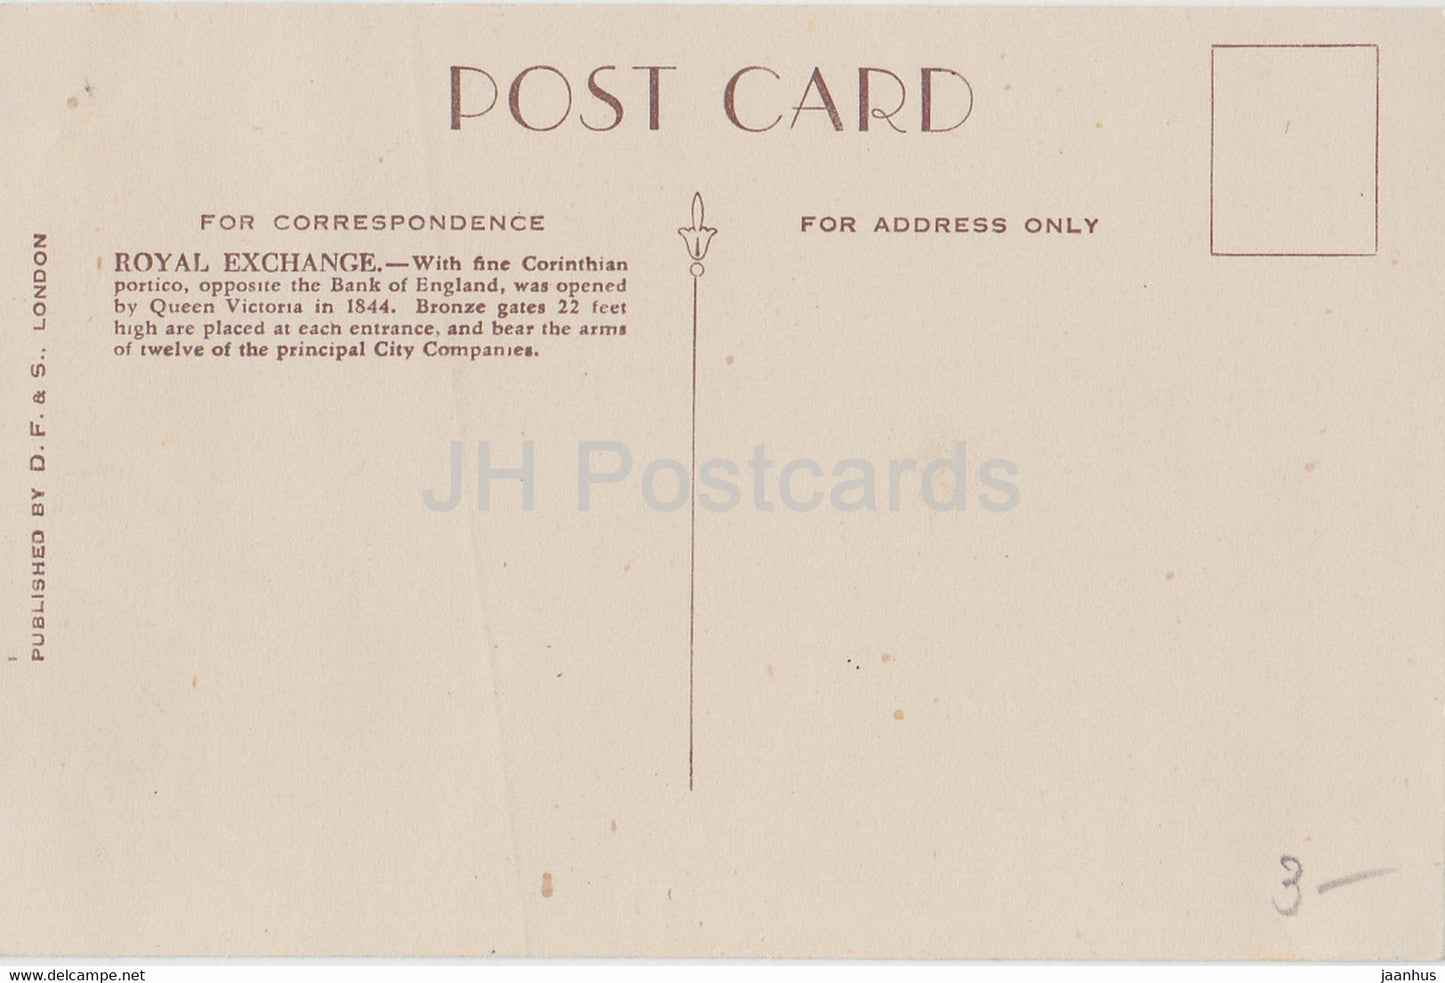 London - The Royal Exchange - car - old postcard - England - United Kingdom - unused